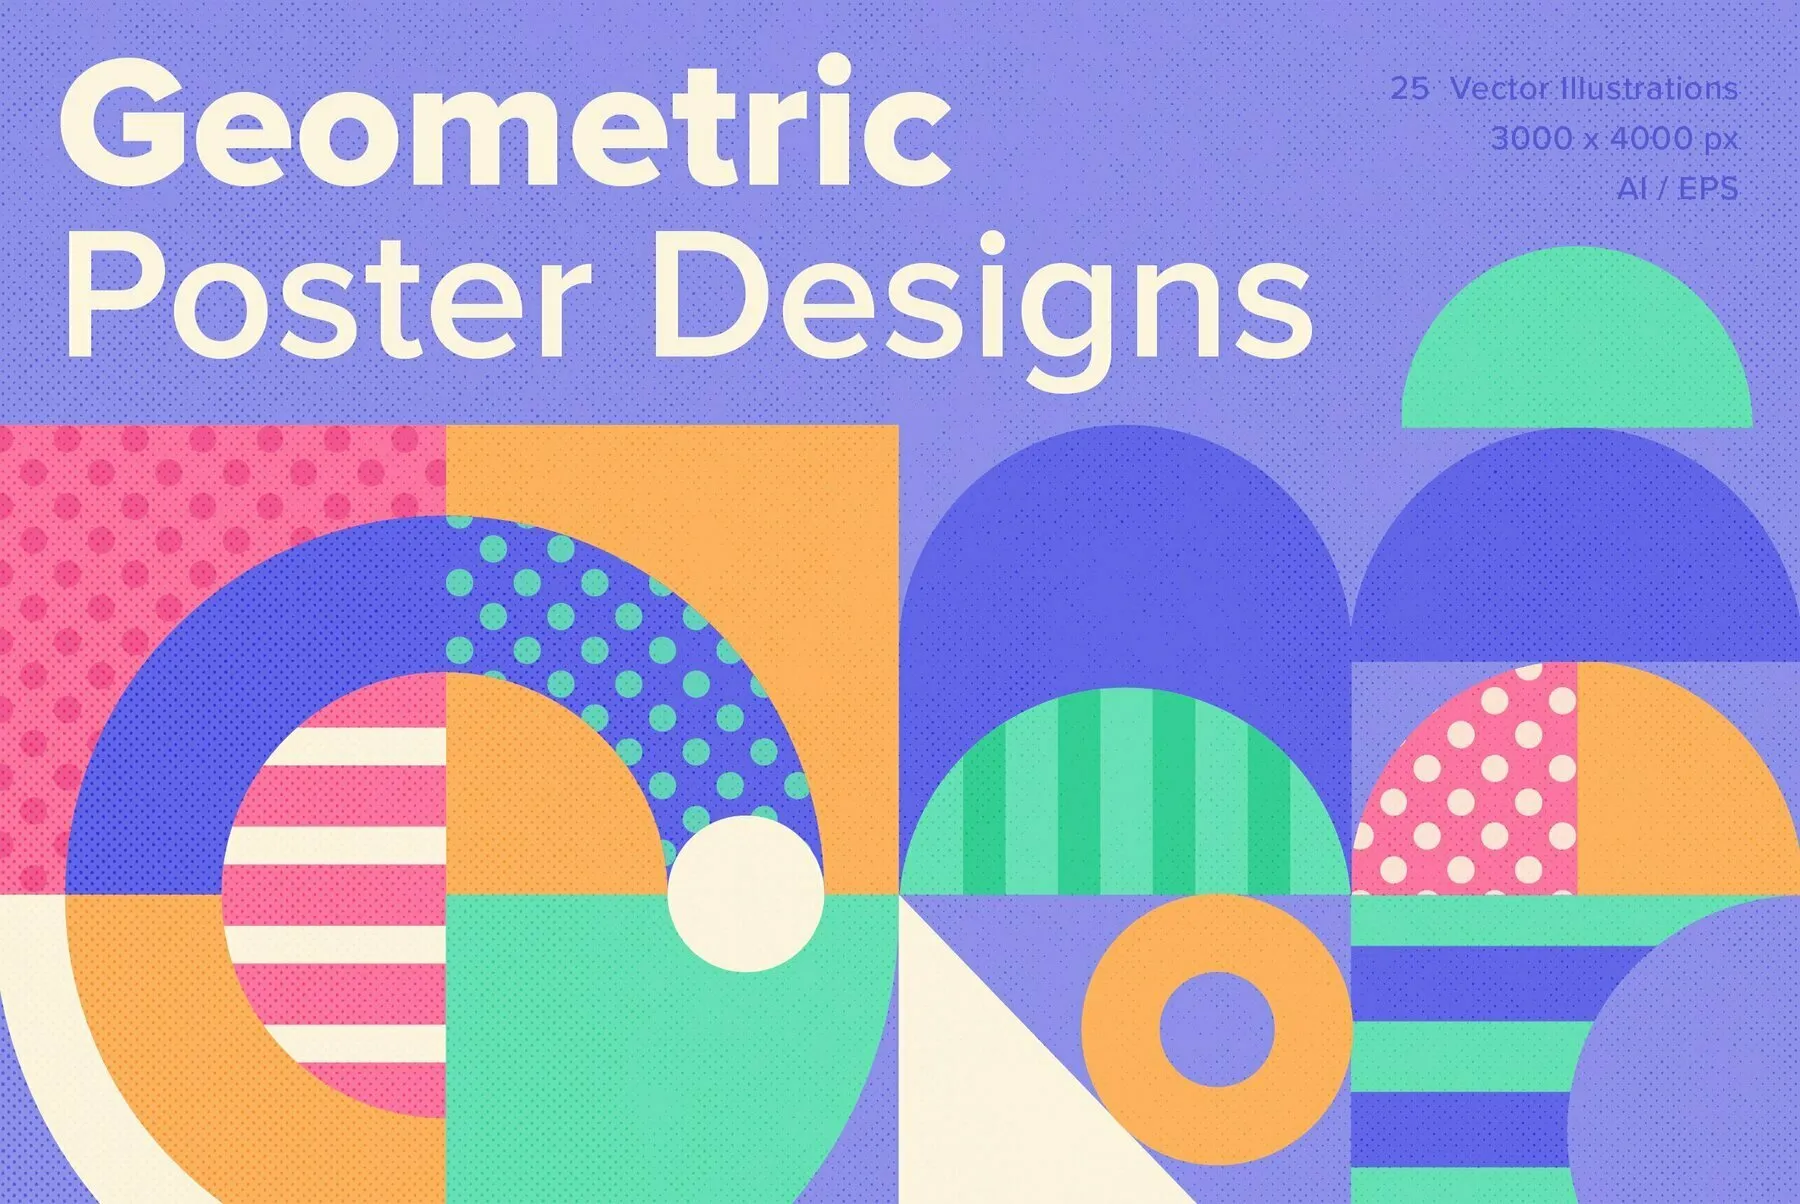 Geometric Poster Designs